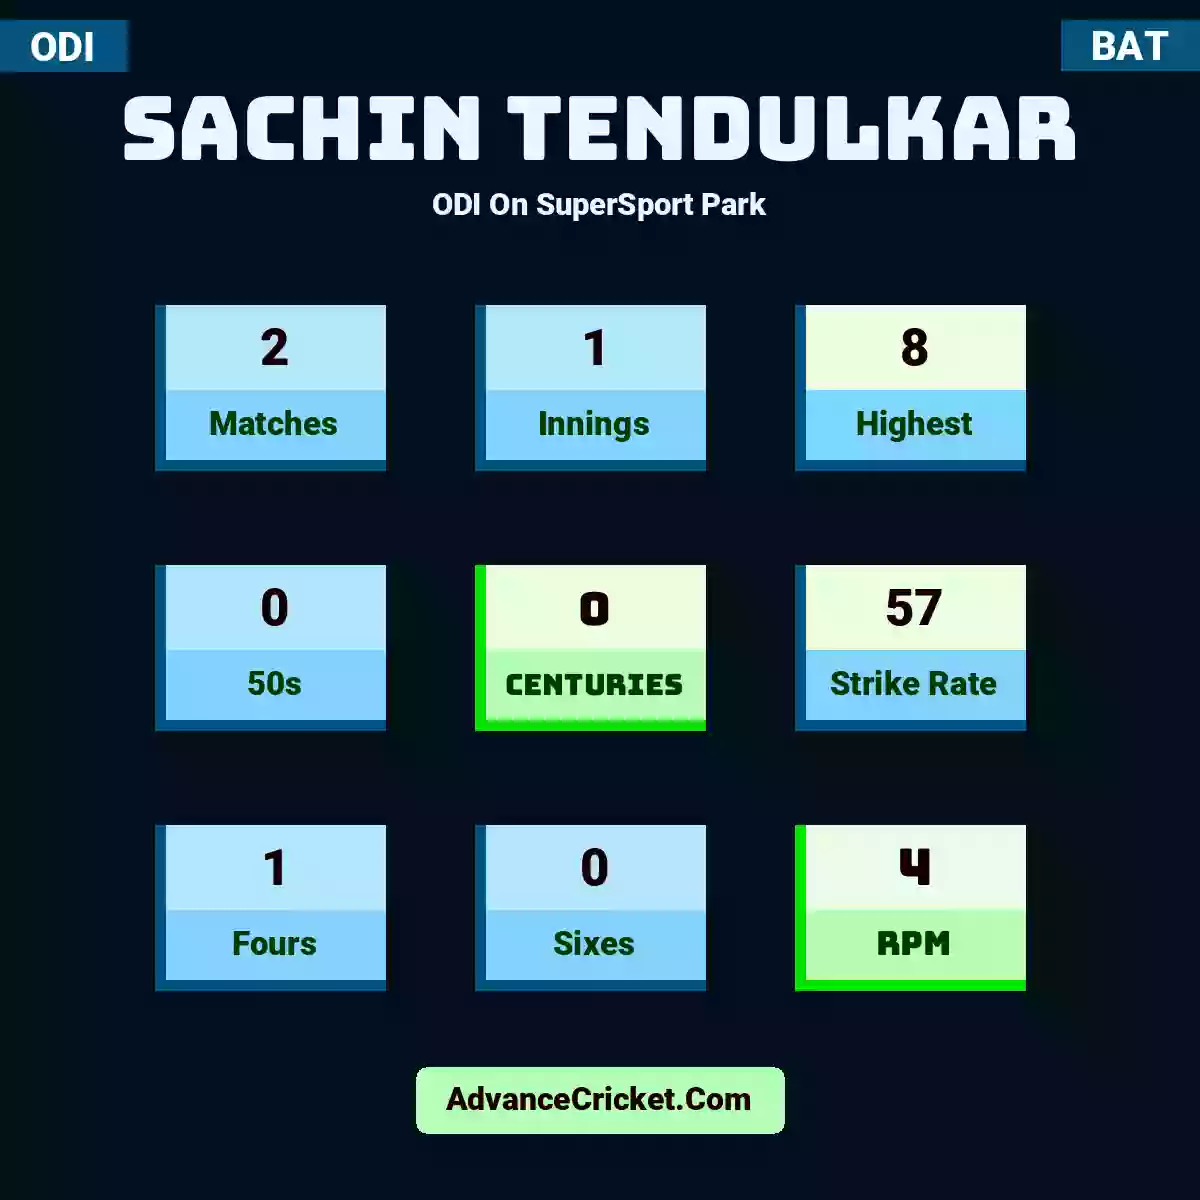 Sachin Tendulkar ODI  On SuperSport Park, Sachin Tendulkar played 2 matches, scored 8 runs as highest, 0 half-centuries, and 0 centuries, with a strike rate of 57. S.Tendulkar hit 1 fours and 0 sixes, with an RPM of 4.